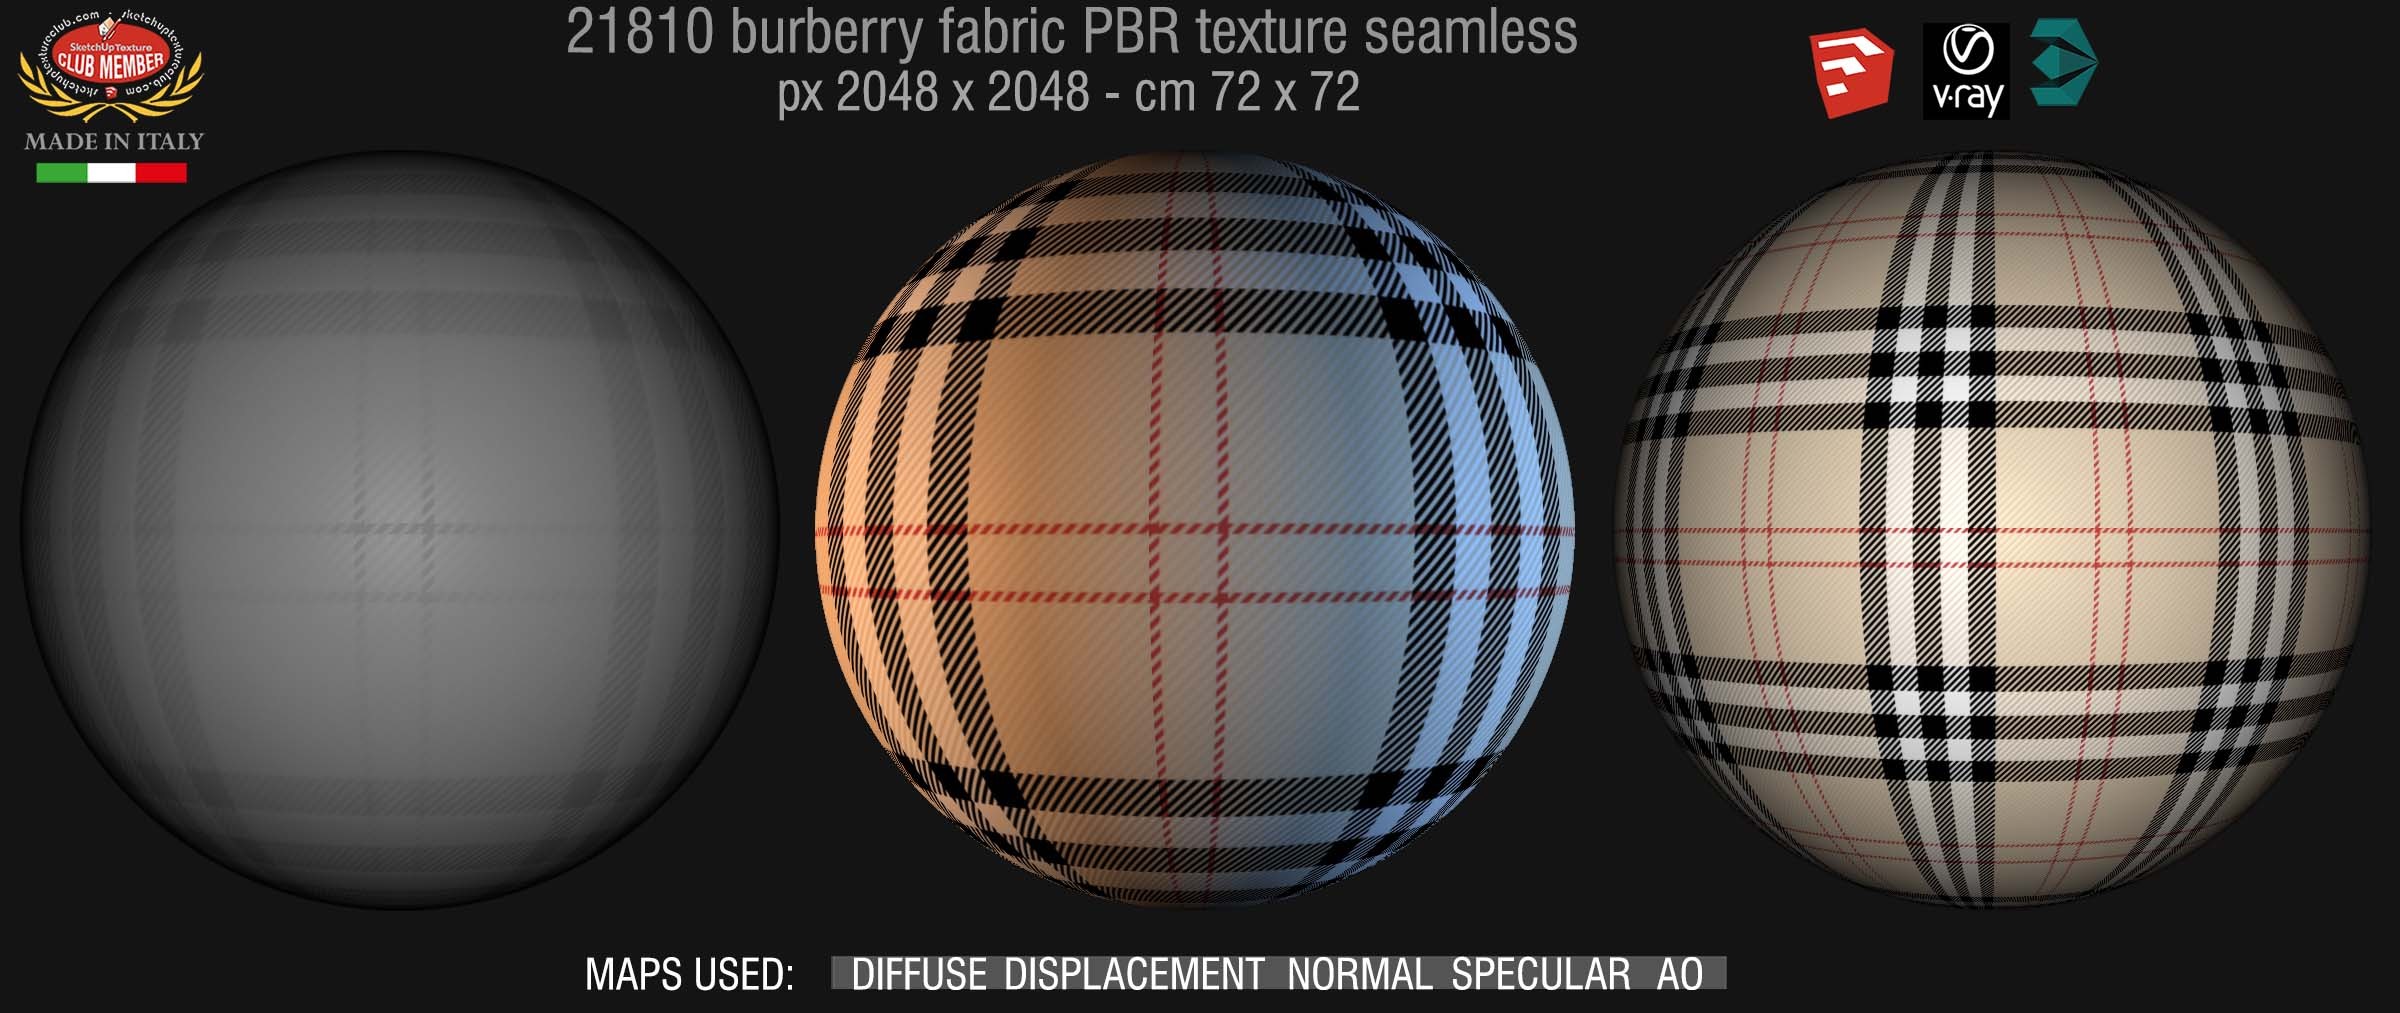 21810 burberry fabric PBR texture seamless DEMO